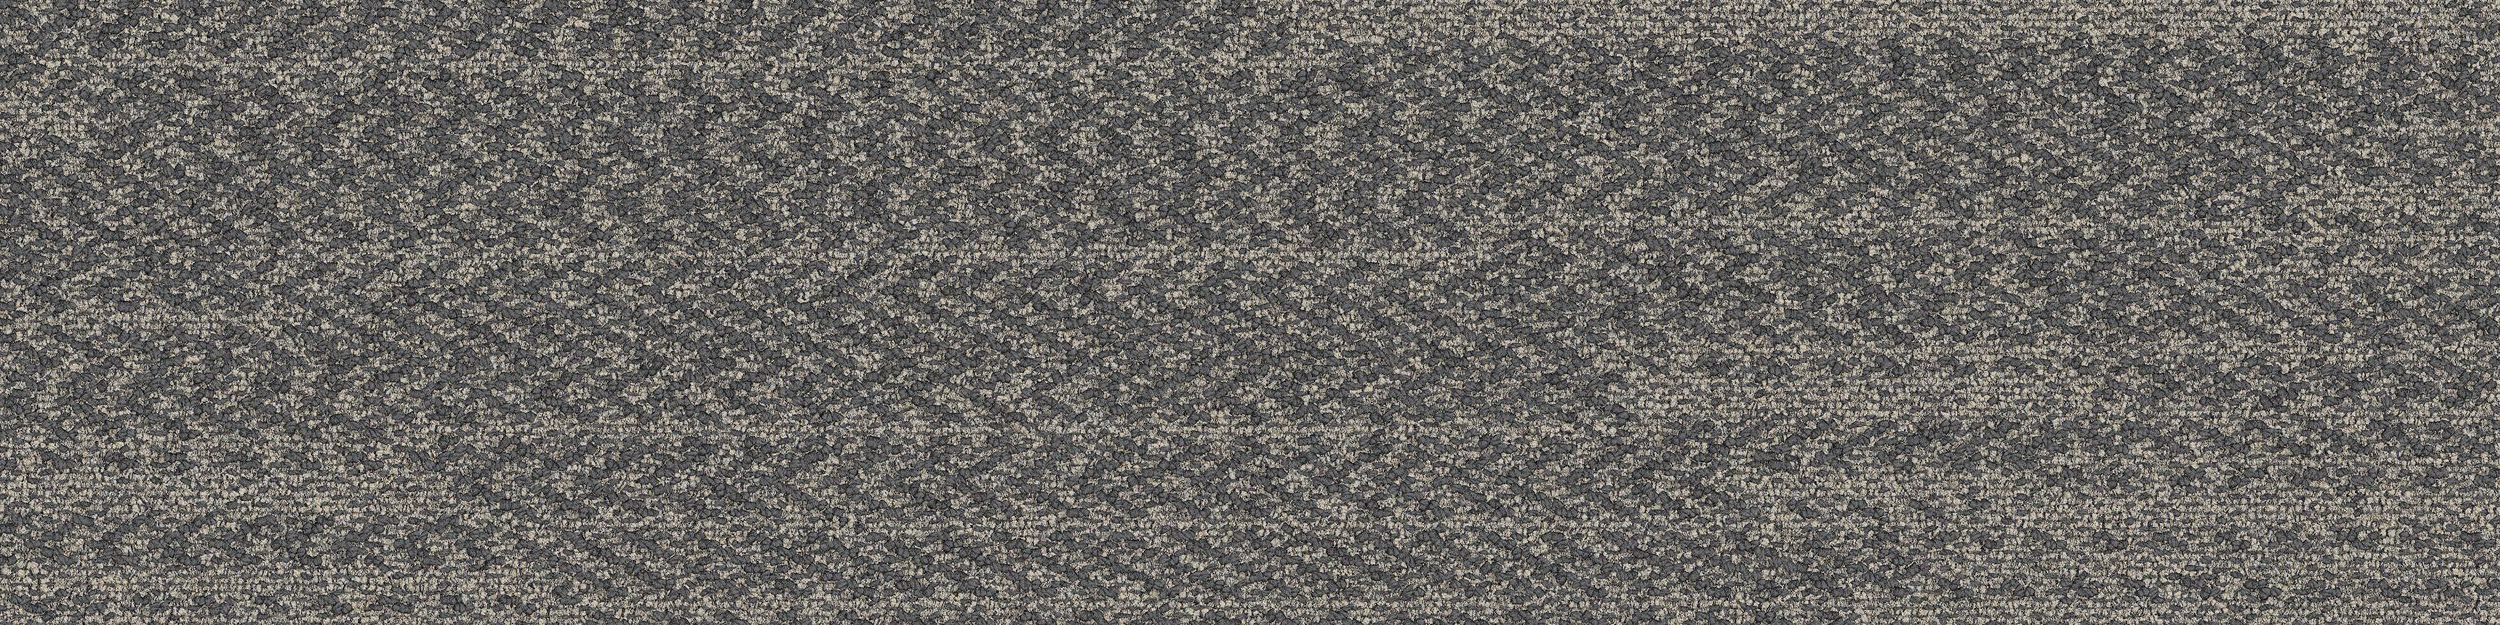 Open Air 408 Carpet Tile In Nickel image number 2